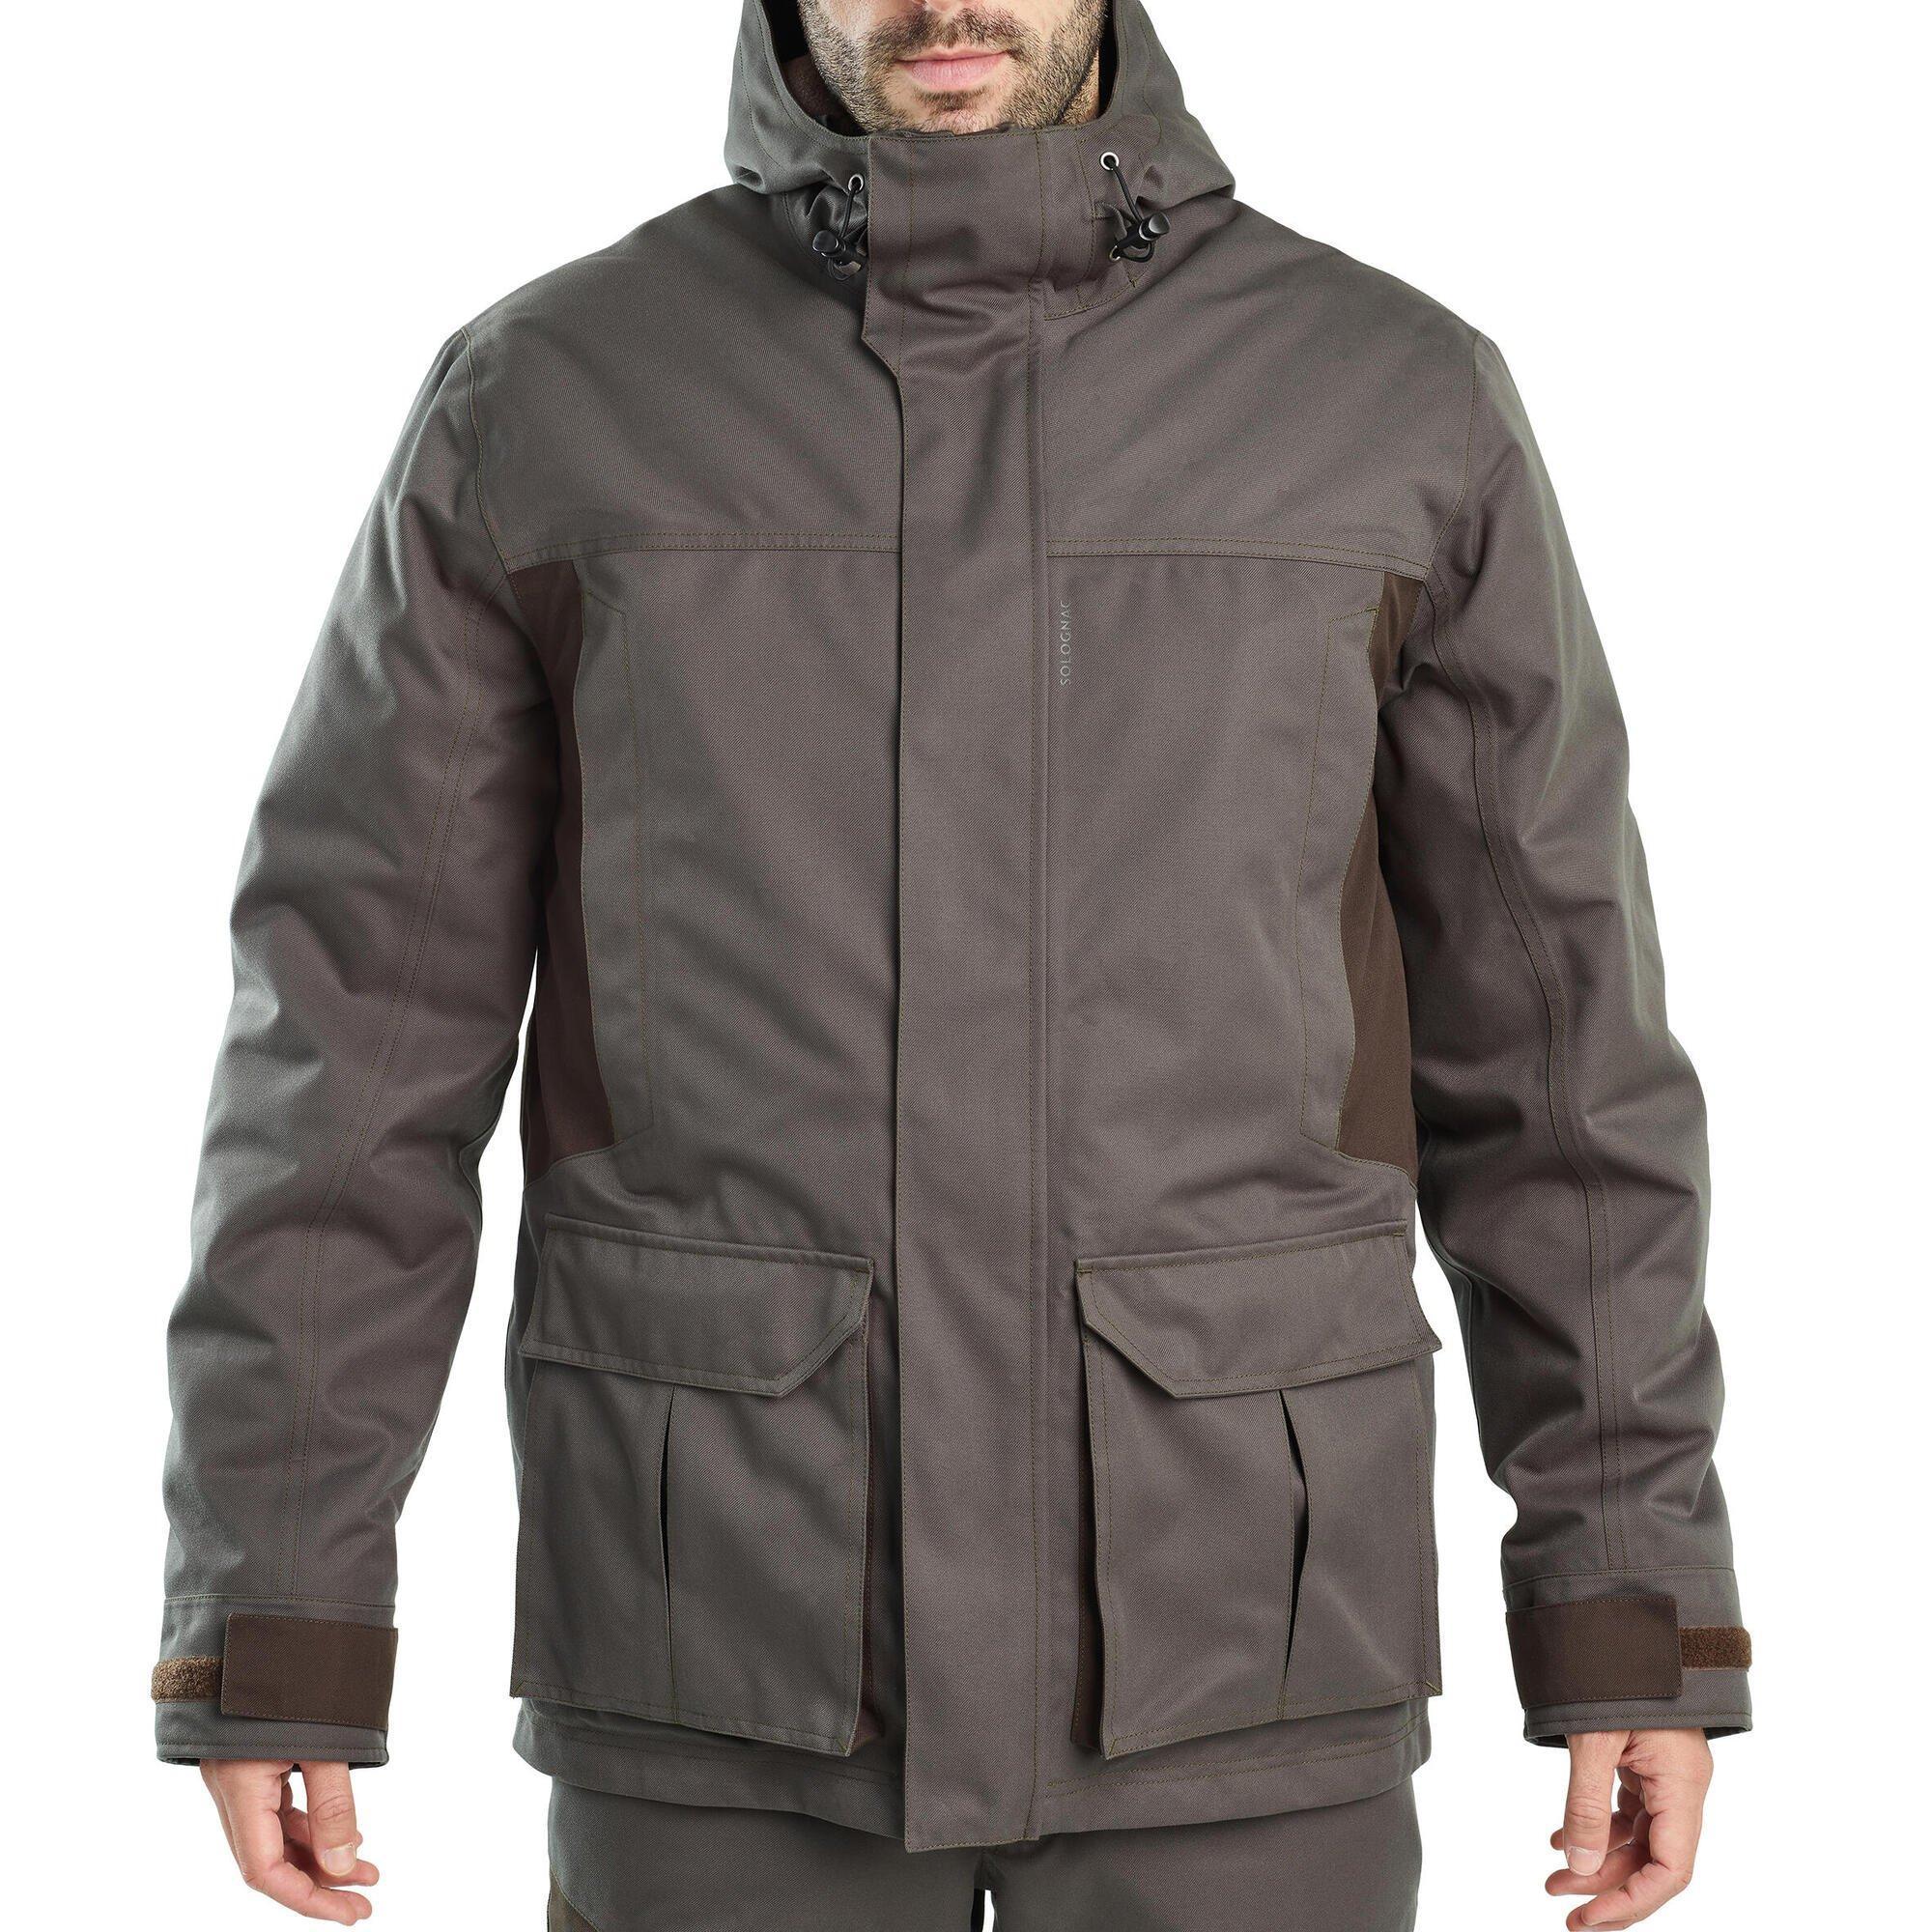 Overshirt Sherpa Jacket - 500 Camo - Khaki - Solognac - Decathlon